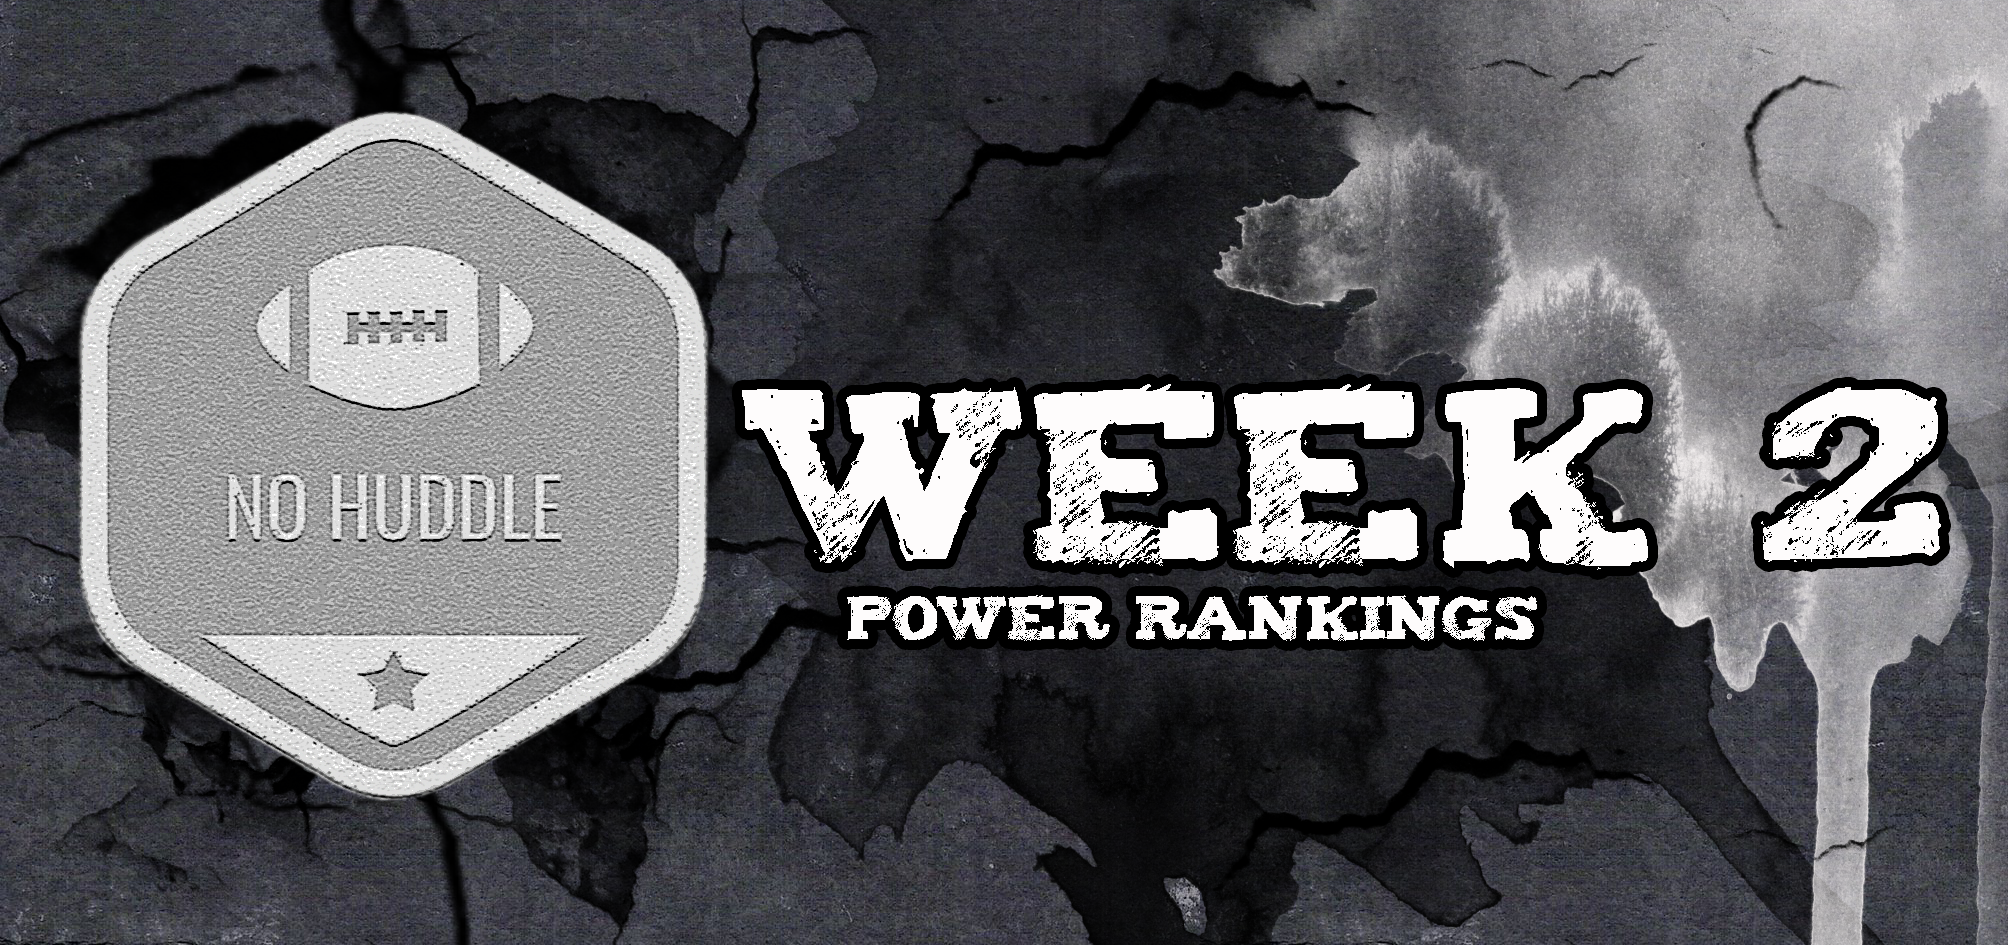 Power Rankings: Semana 2